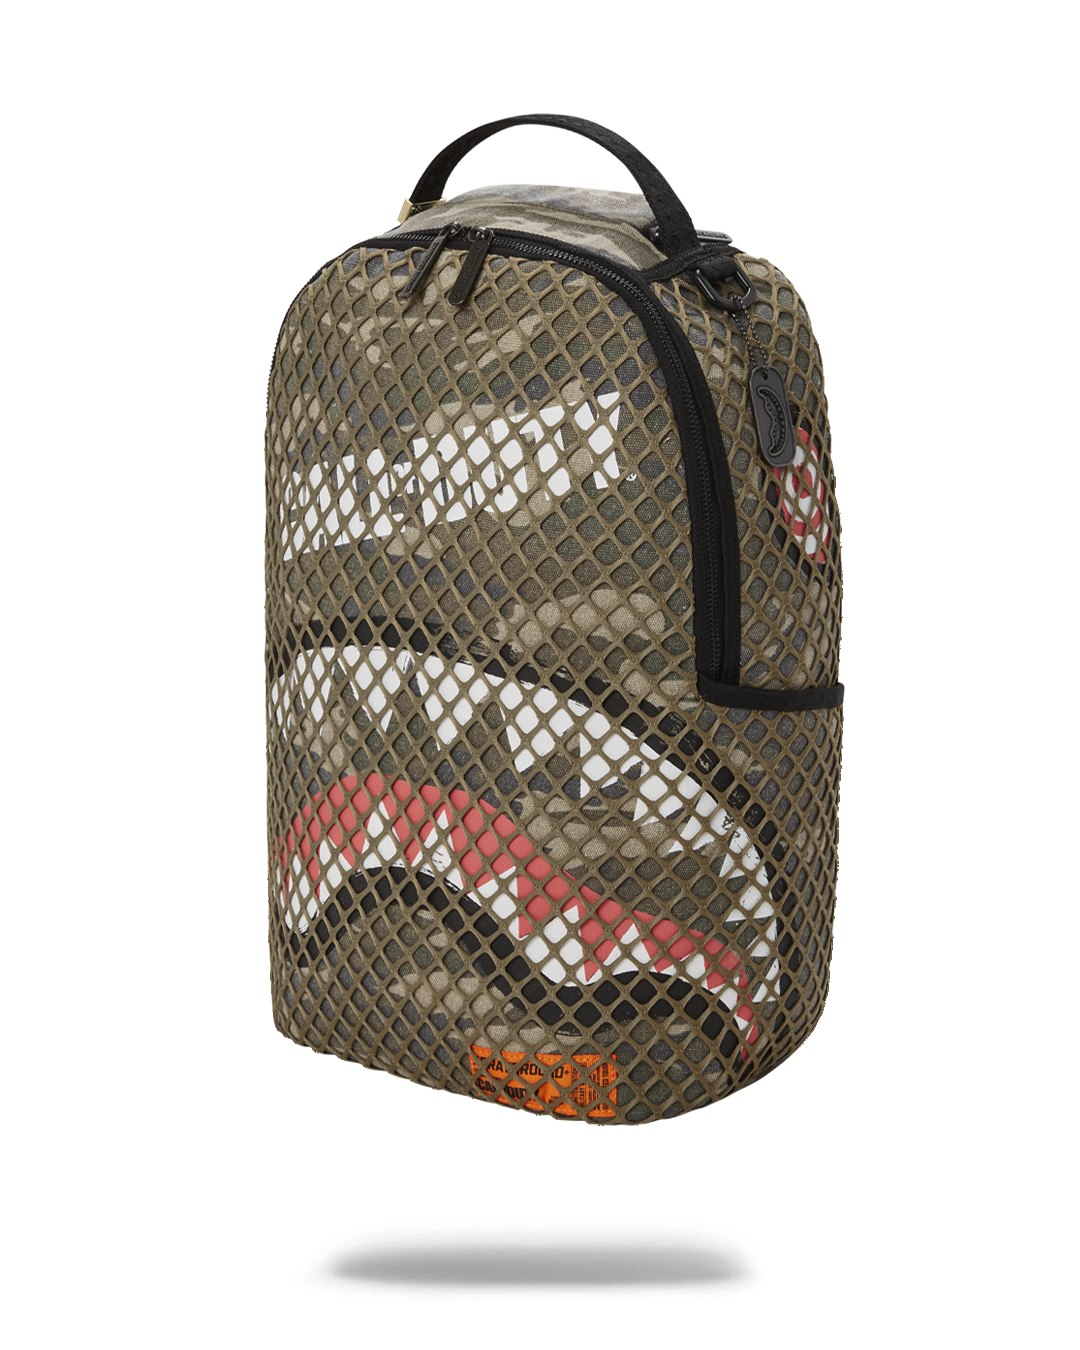 Backpacks Sprayground - Call of duty aviator bear backpack